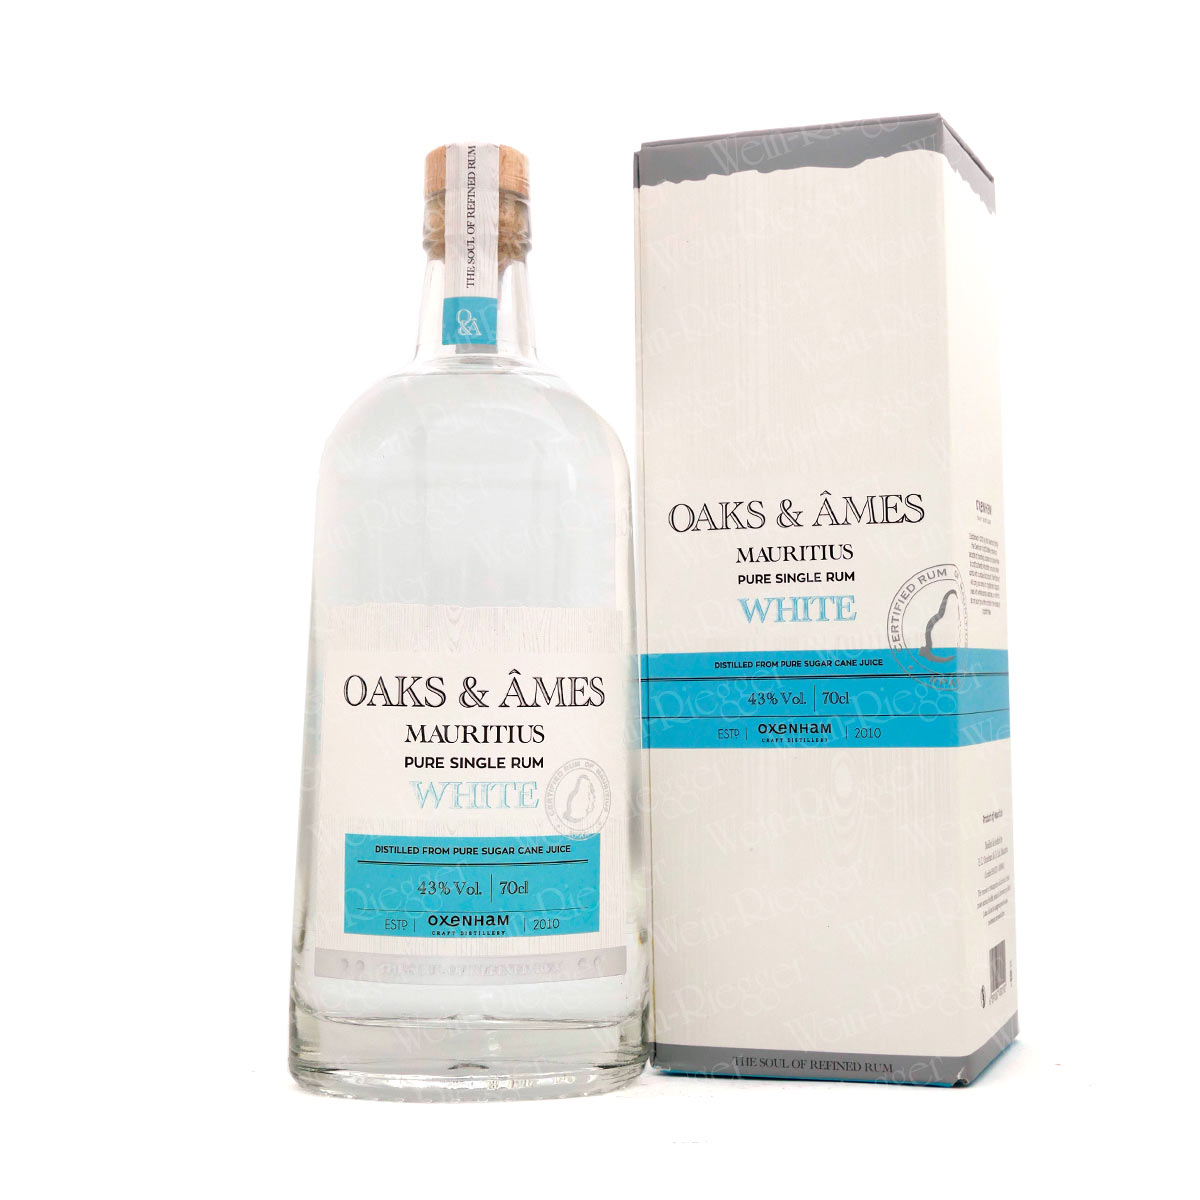 Oaks & Âmes WHITE Mauritius Pure Single Rum